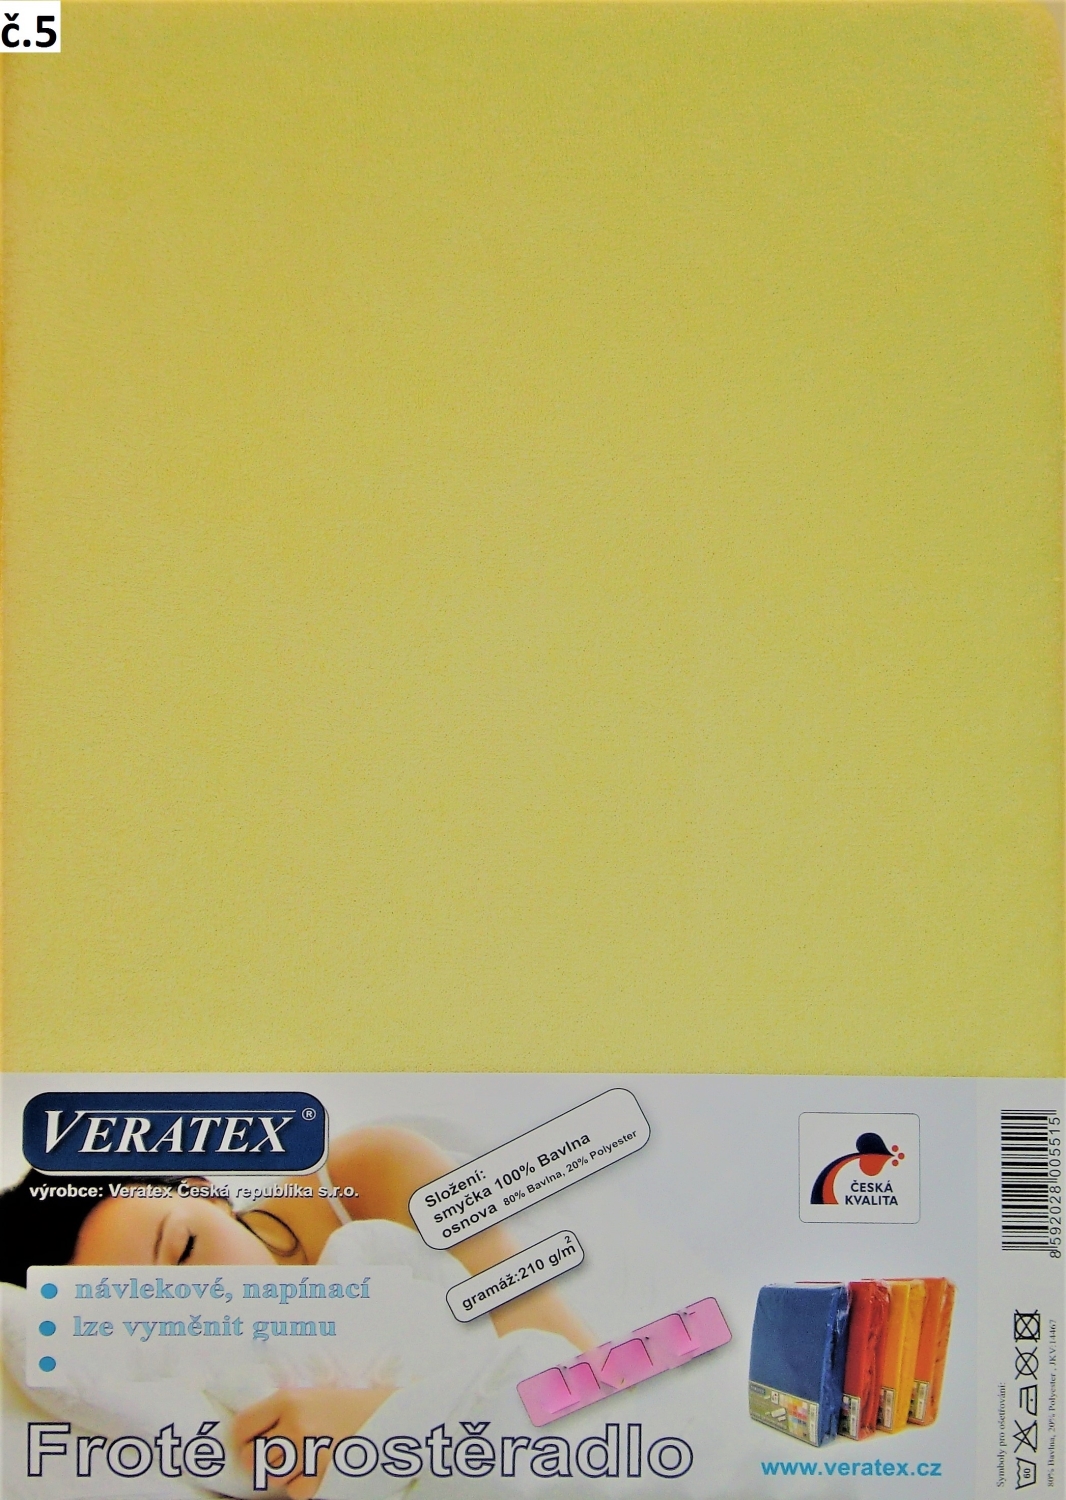 Veratex Froté prostěradlo 200 x 240 cm (č. 5-sv.žlutá) 200 x 240 cm